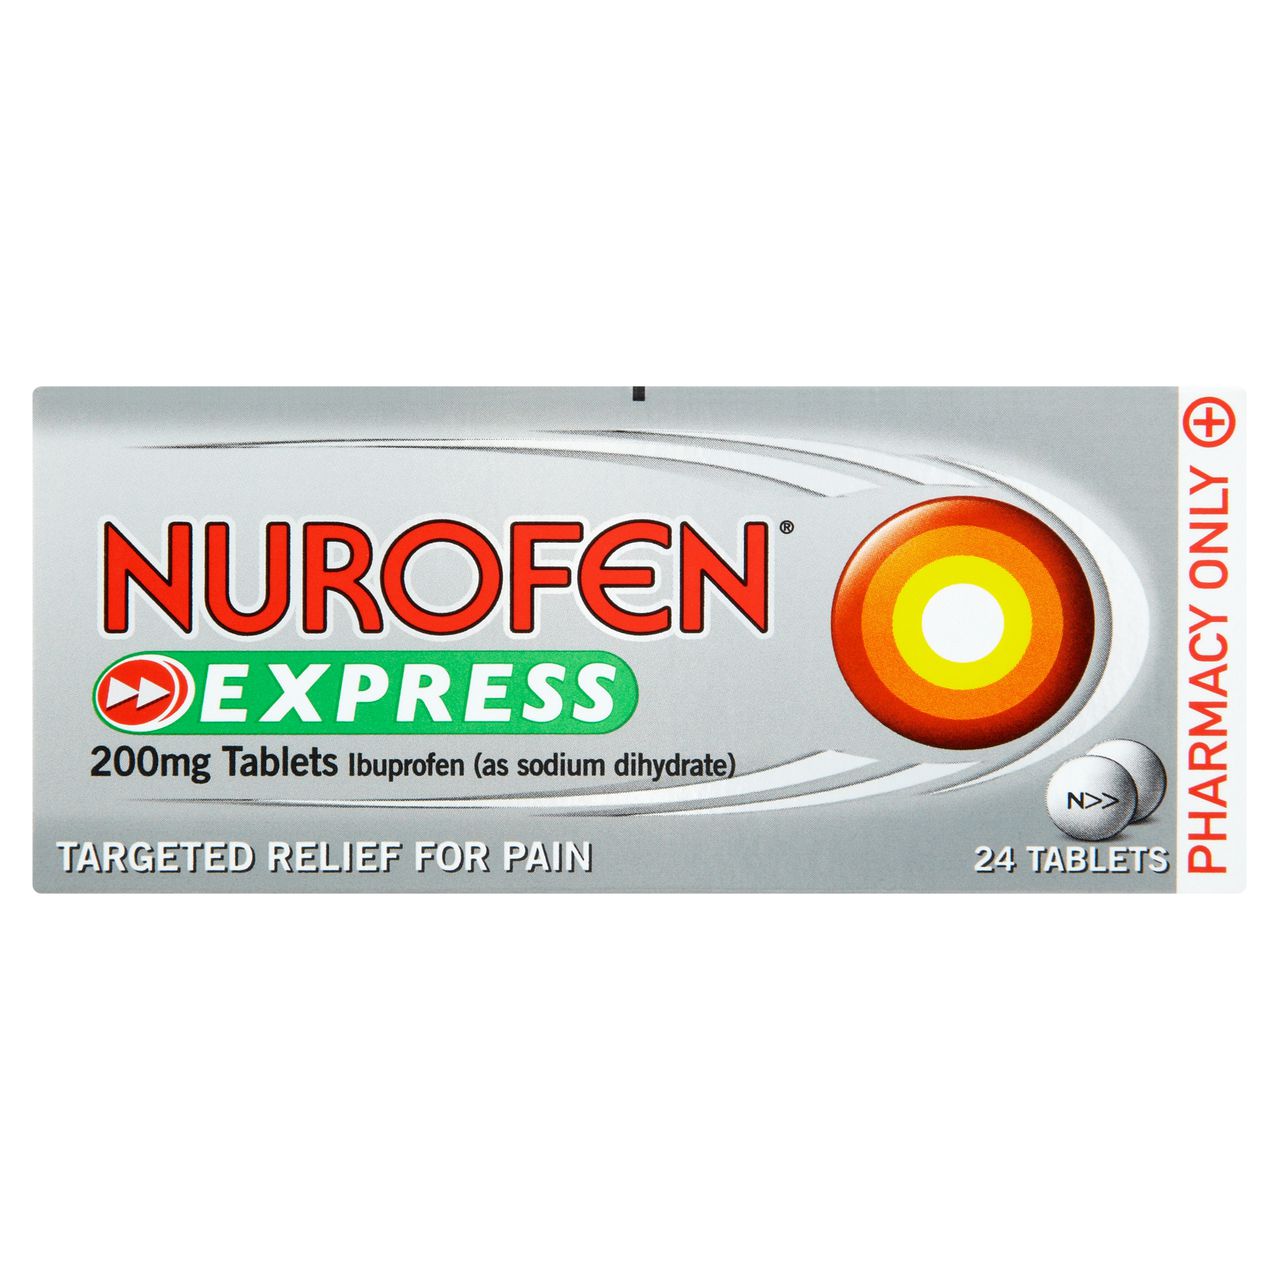 Nurofen Express 200mg Tablets